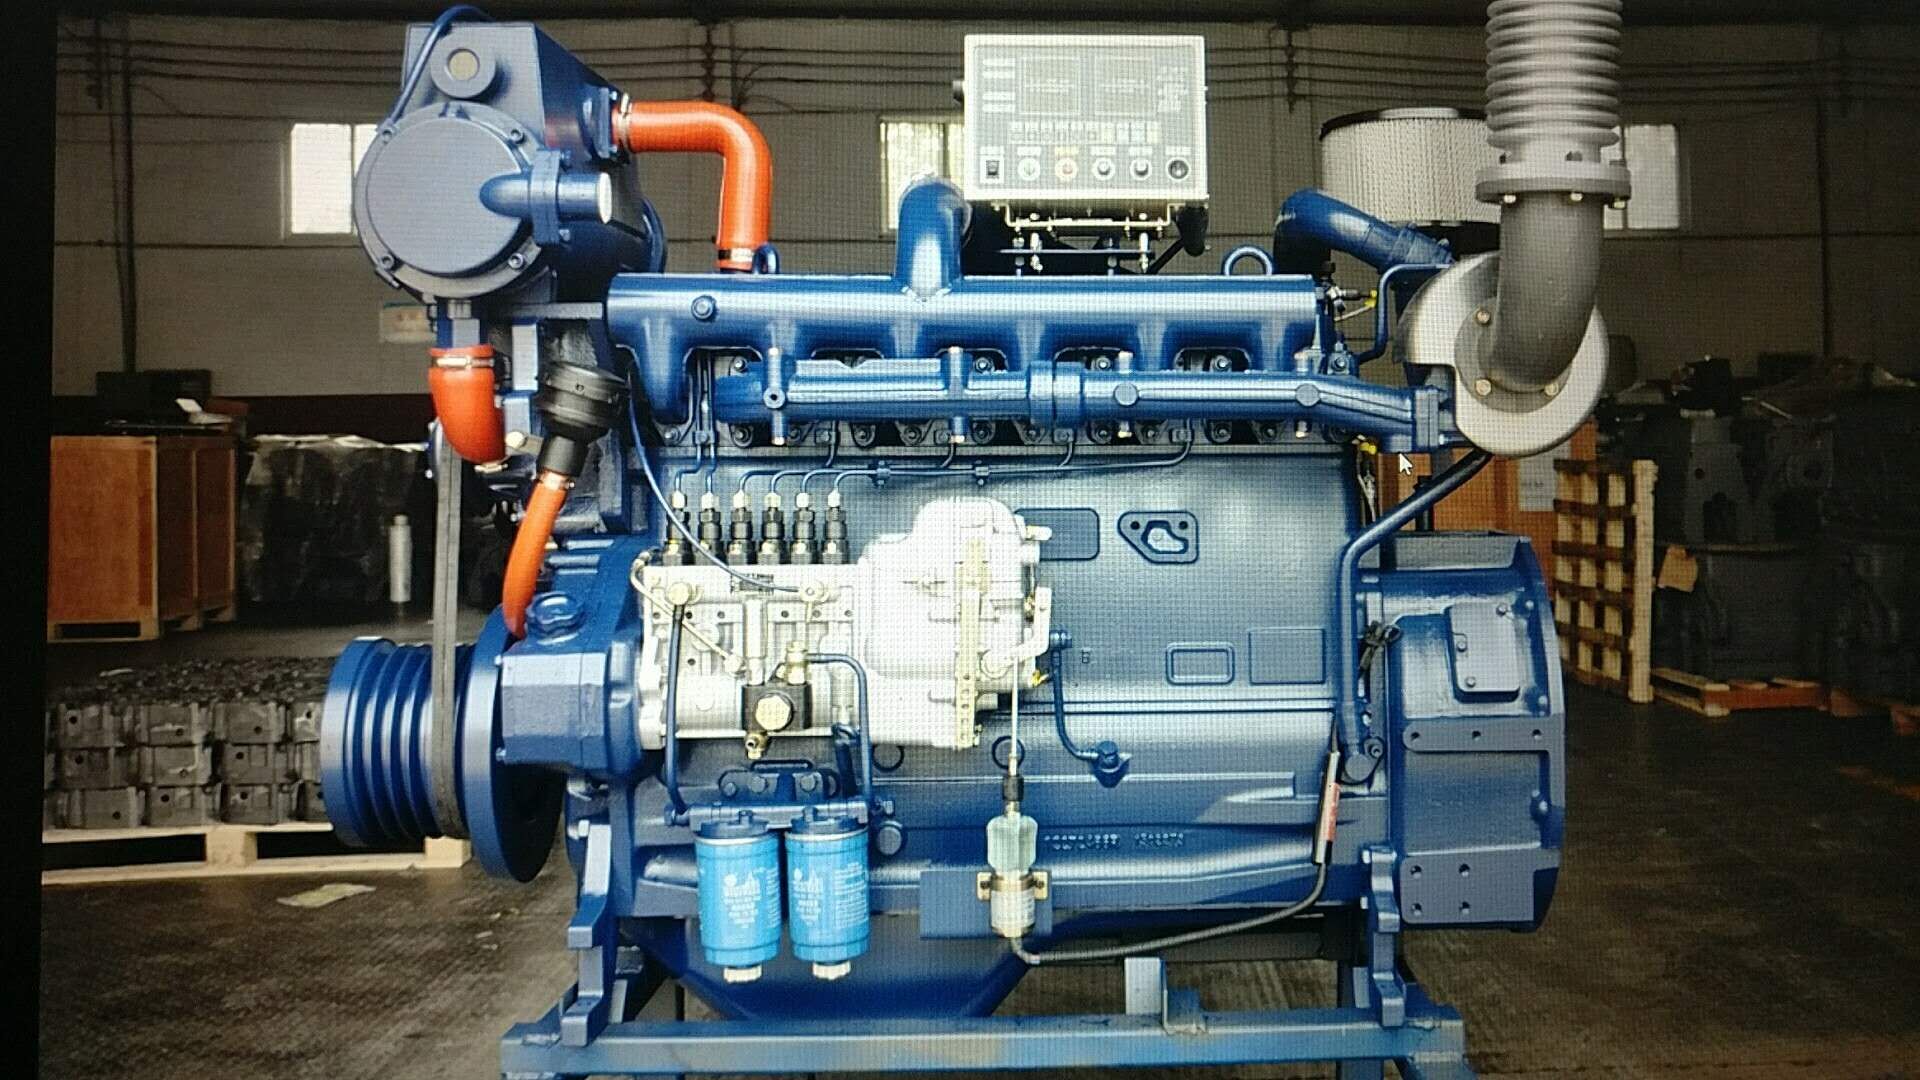 Deutz TD226B-3 TD226B-4 TD226B-6 diesel engine